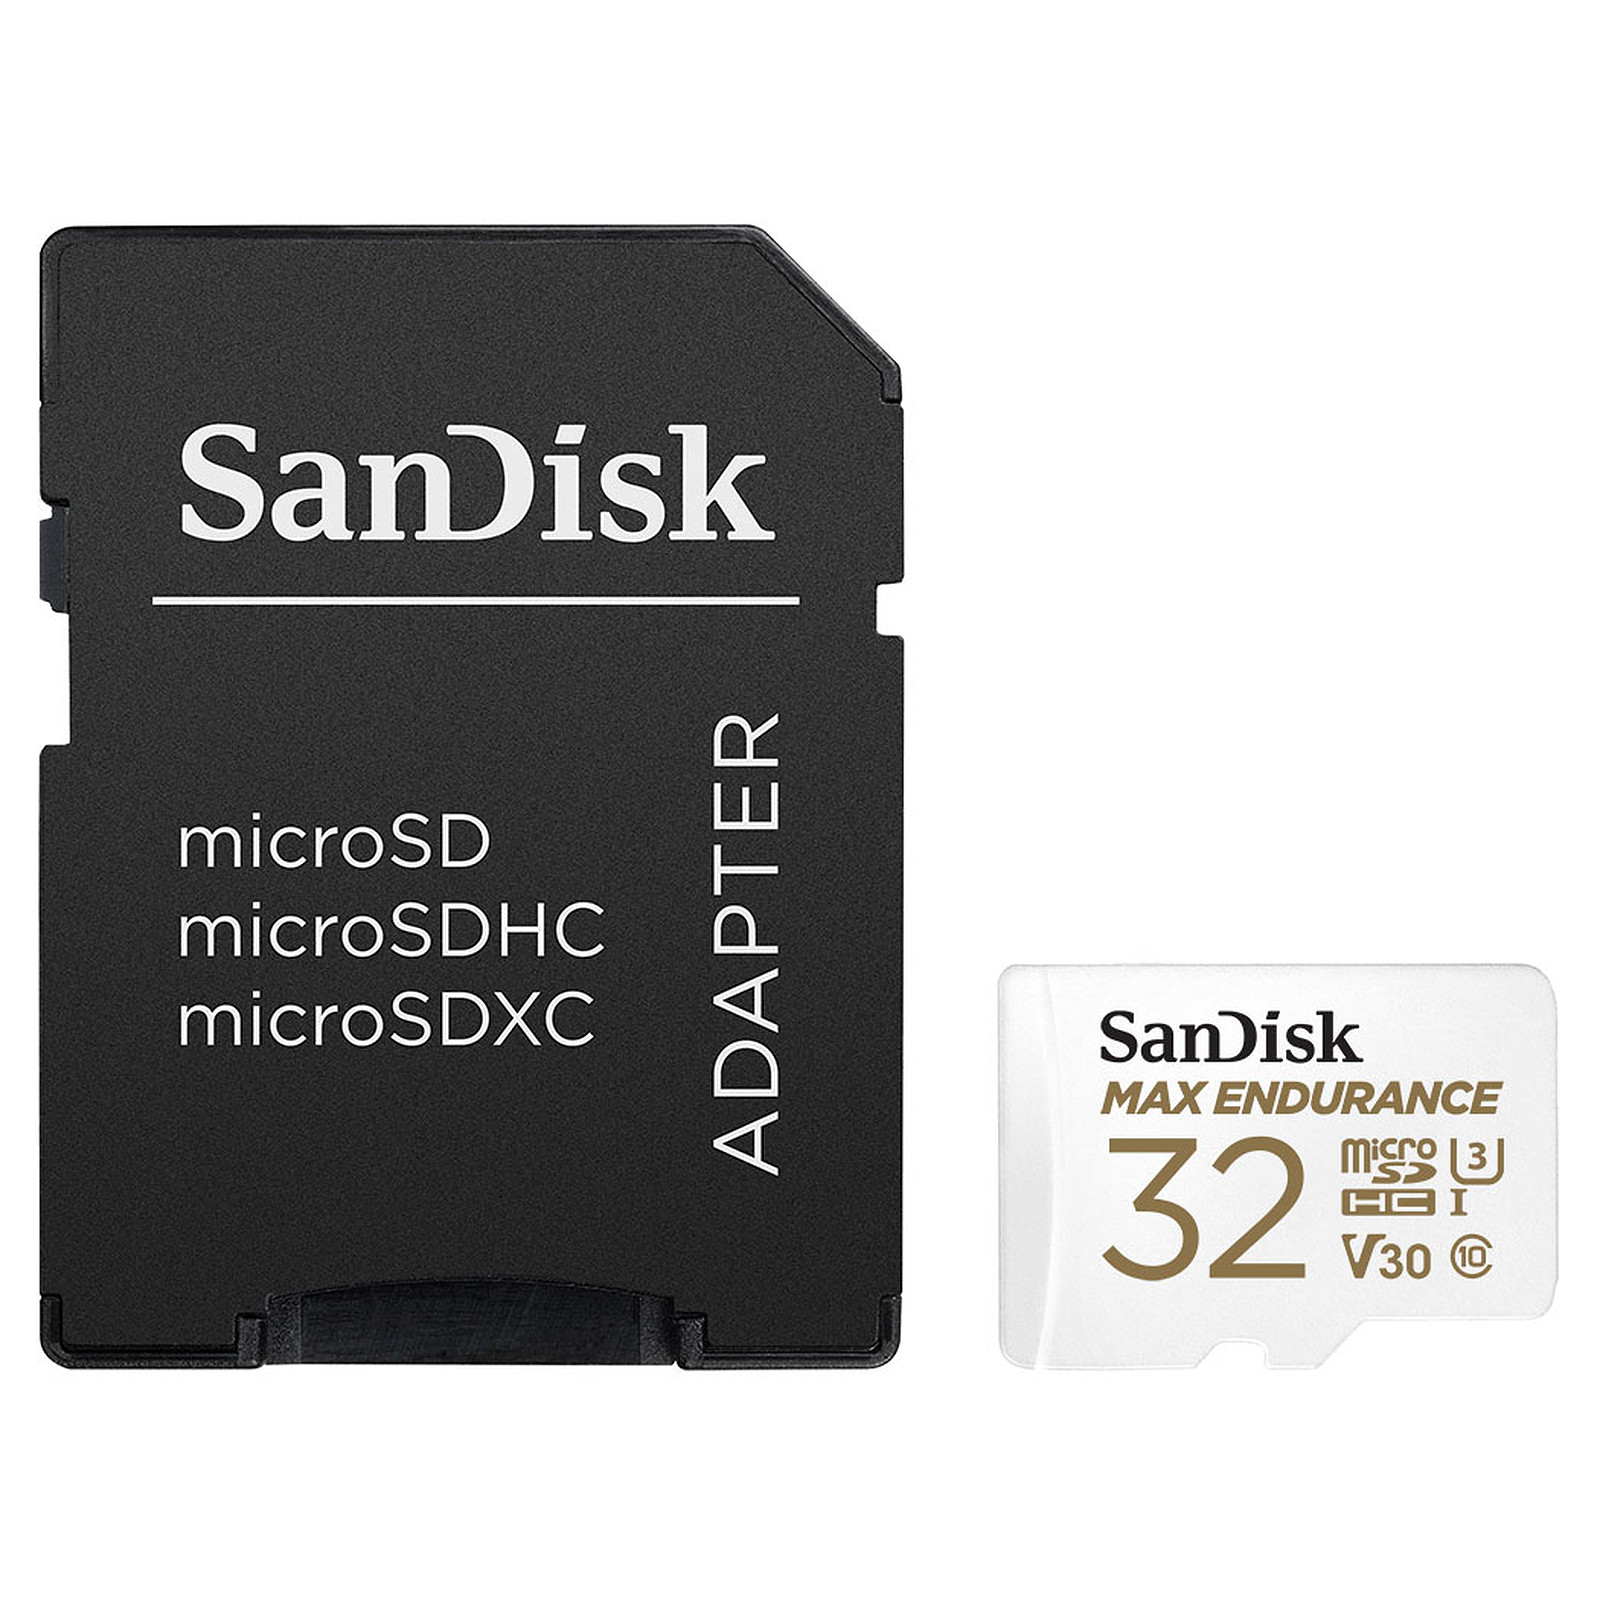 SanDisk Max Endurance microSDHC UHS-I U3 V30 32 Go + Adaptateur SD - Carte memoire Sandisk